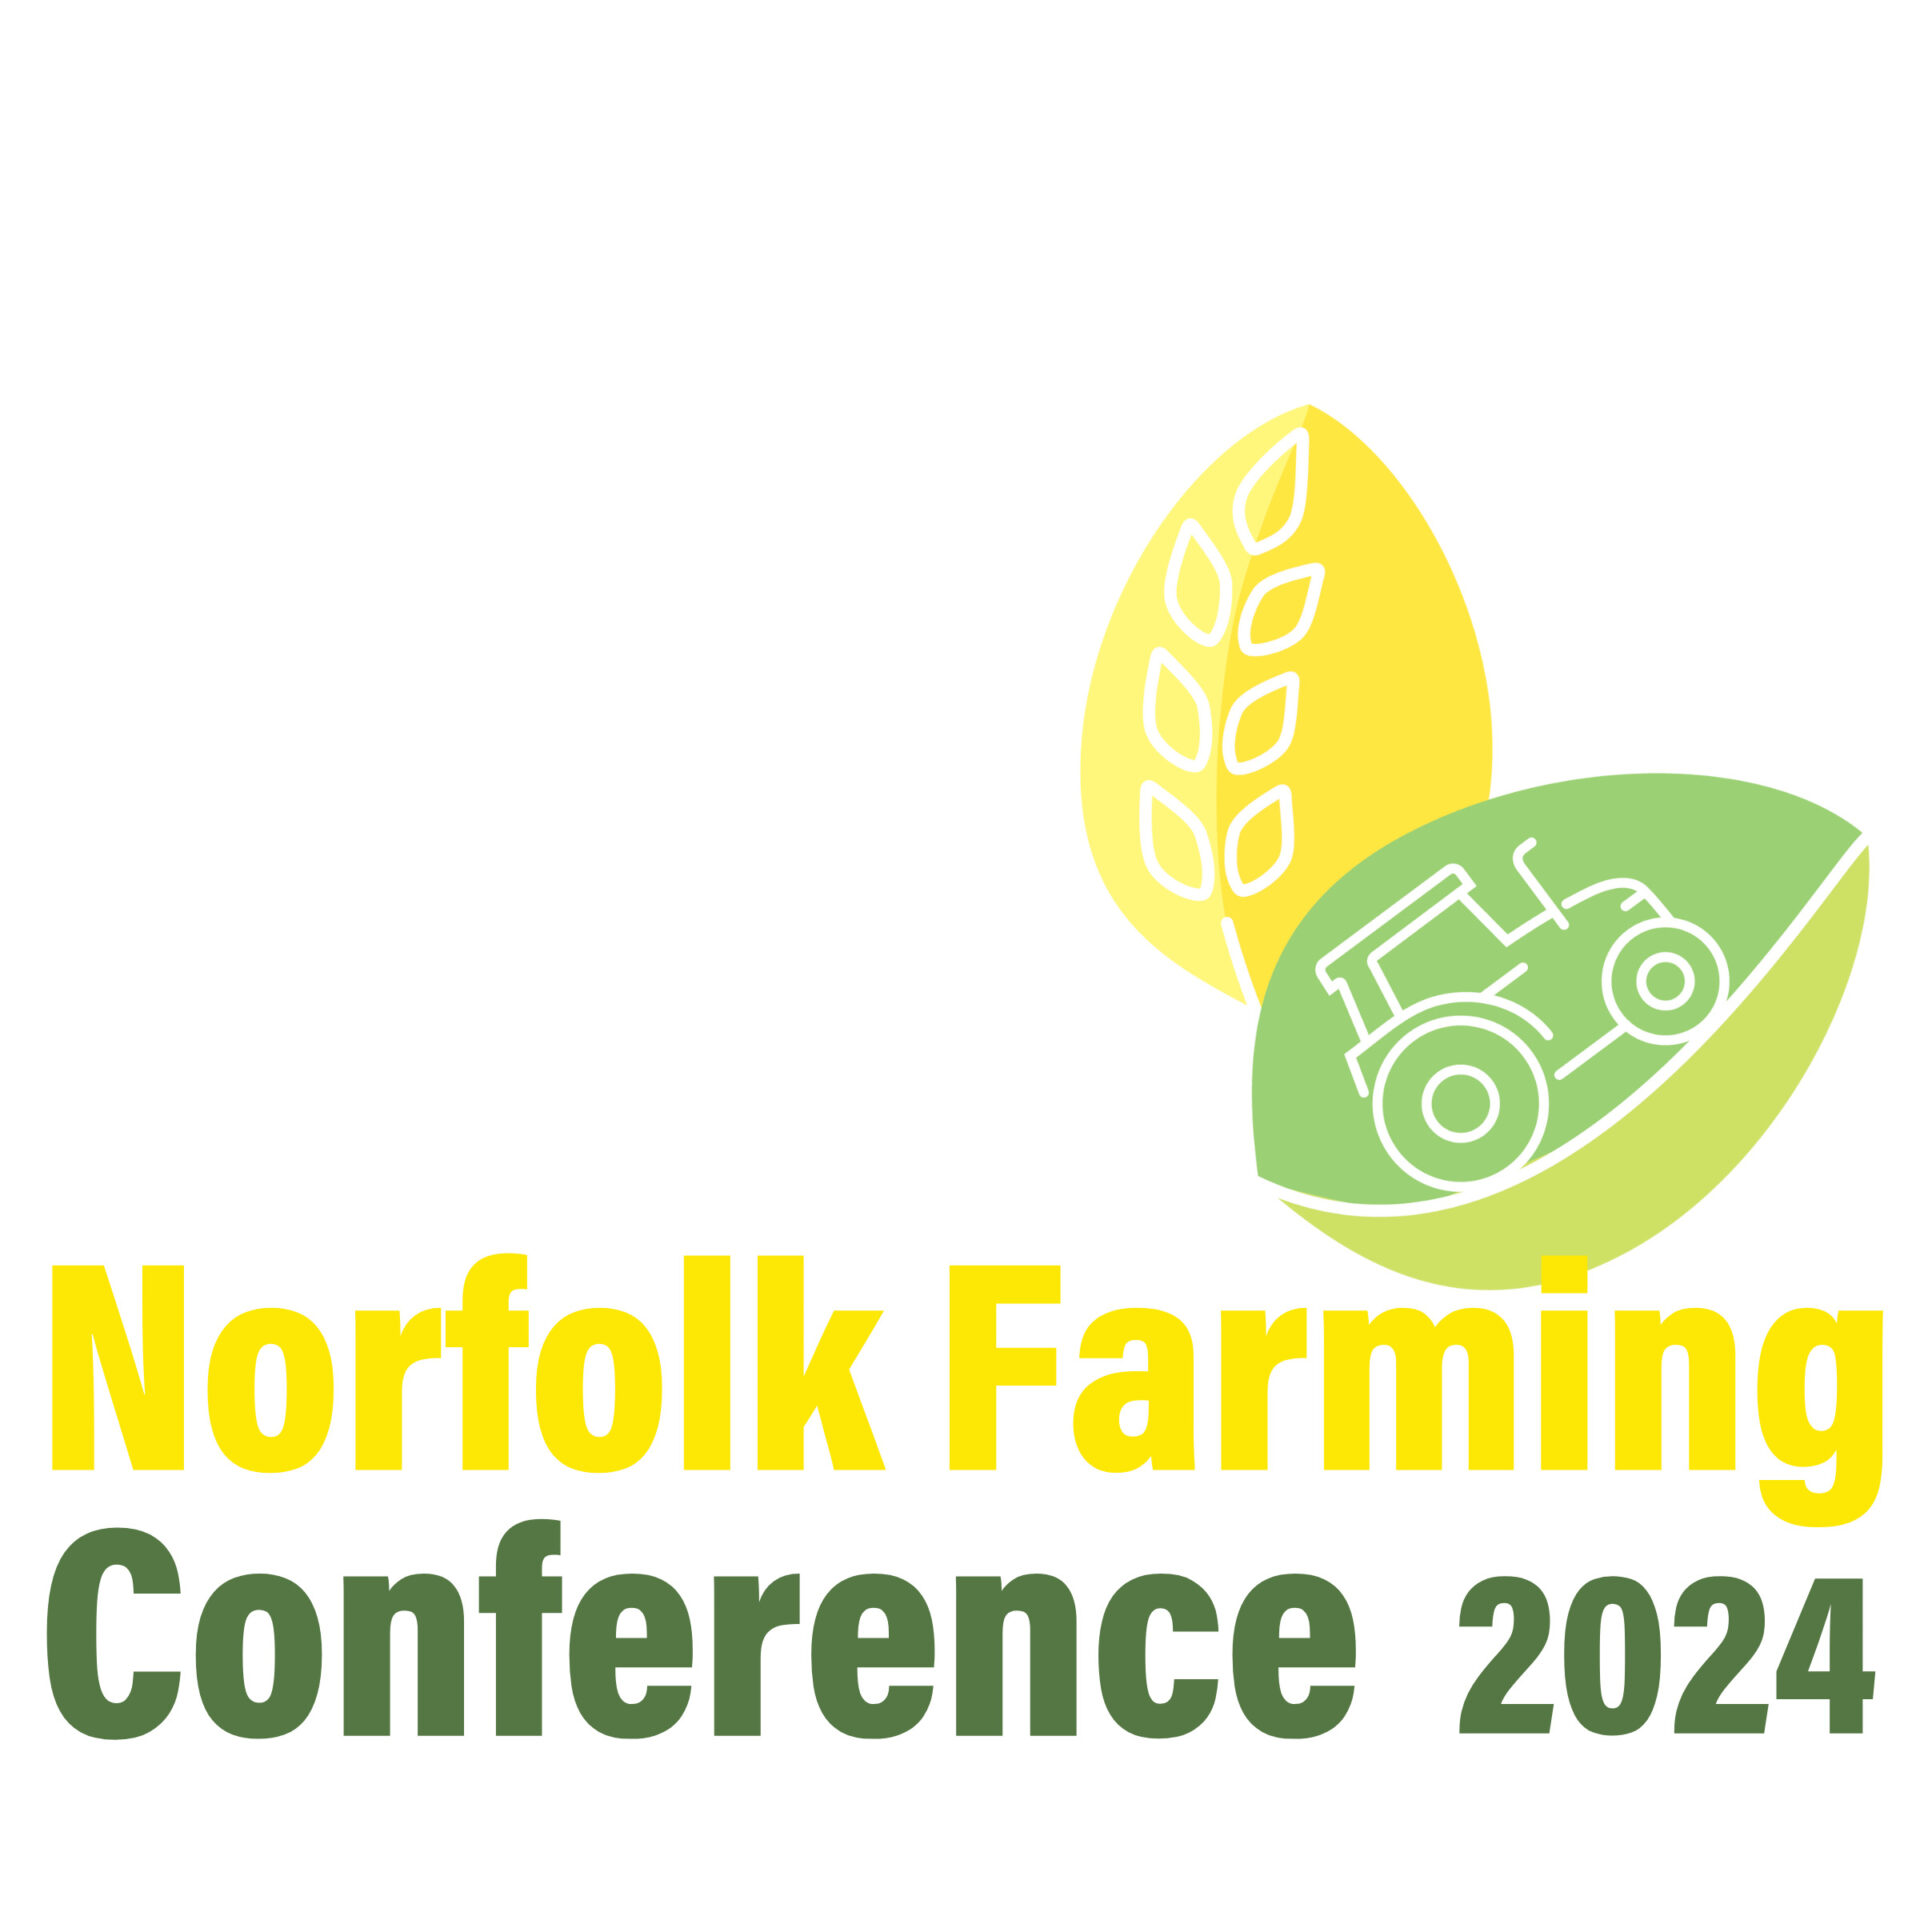 Norfolk Farming Conference 2024